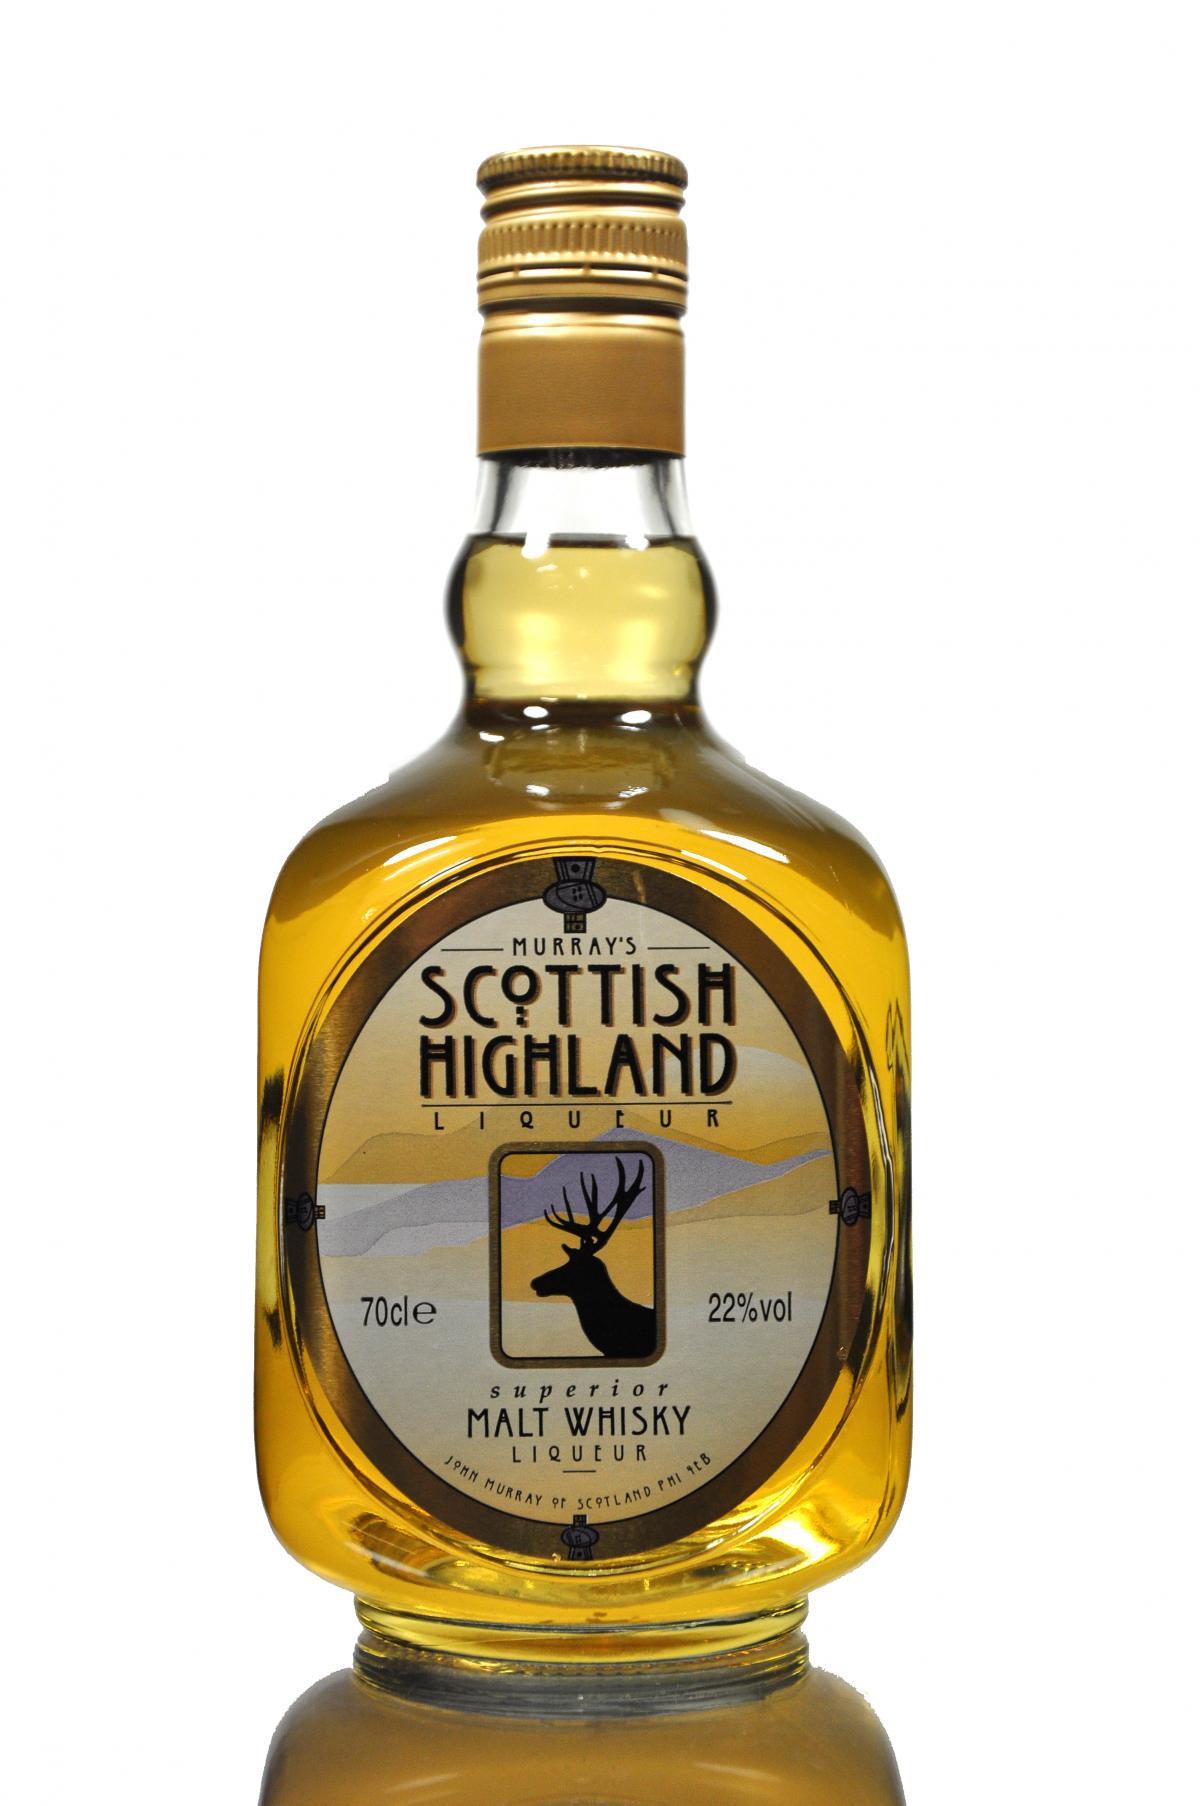 Murrays Scottish Highland Liqueur